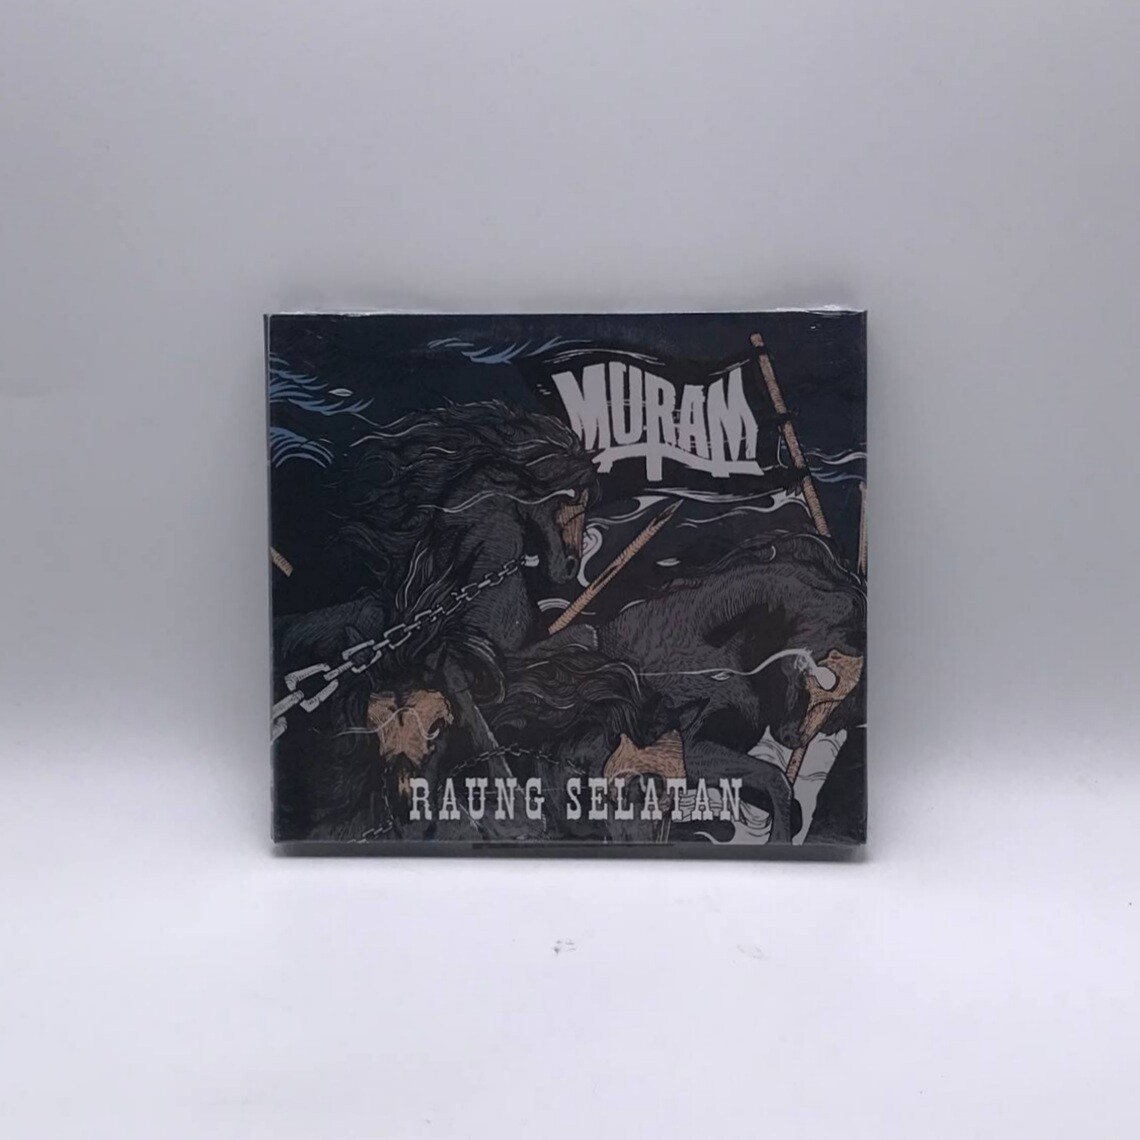 MURAM -RAUNG SELATAN- CD